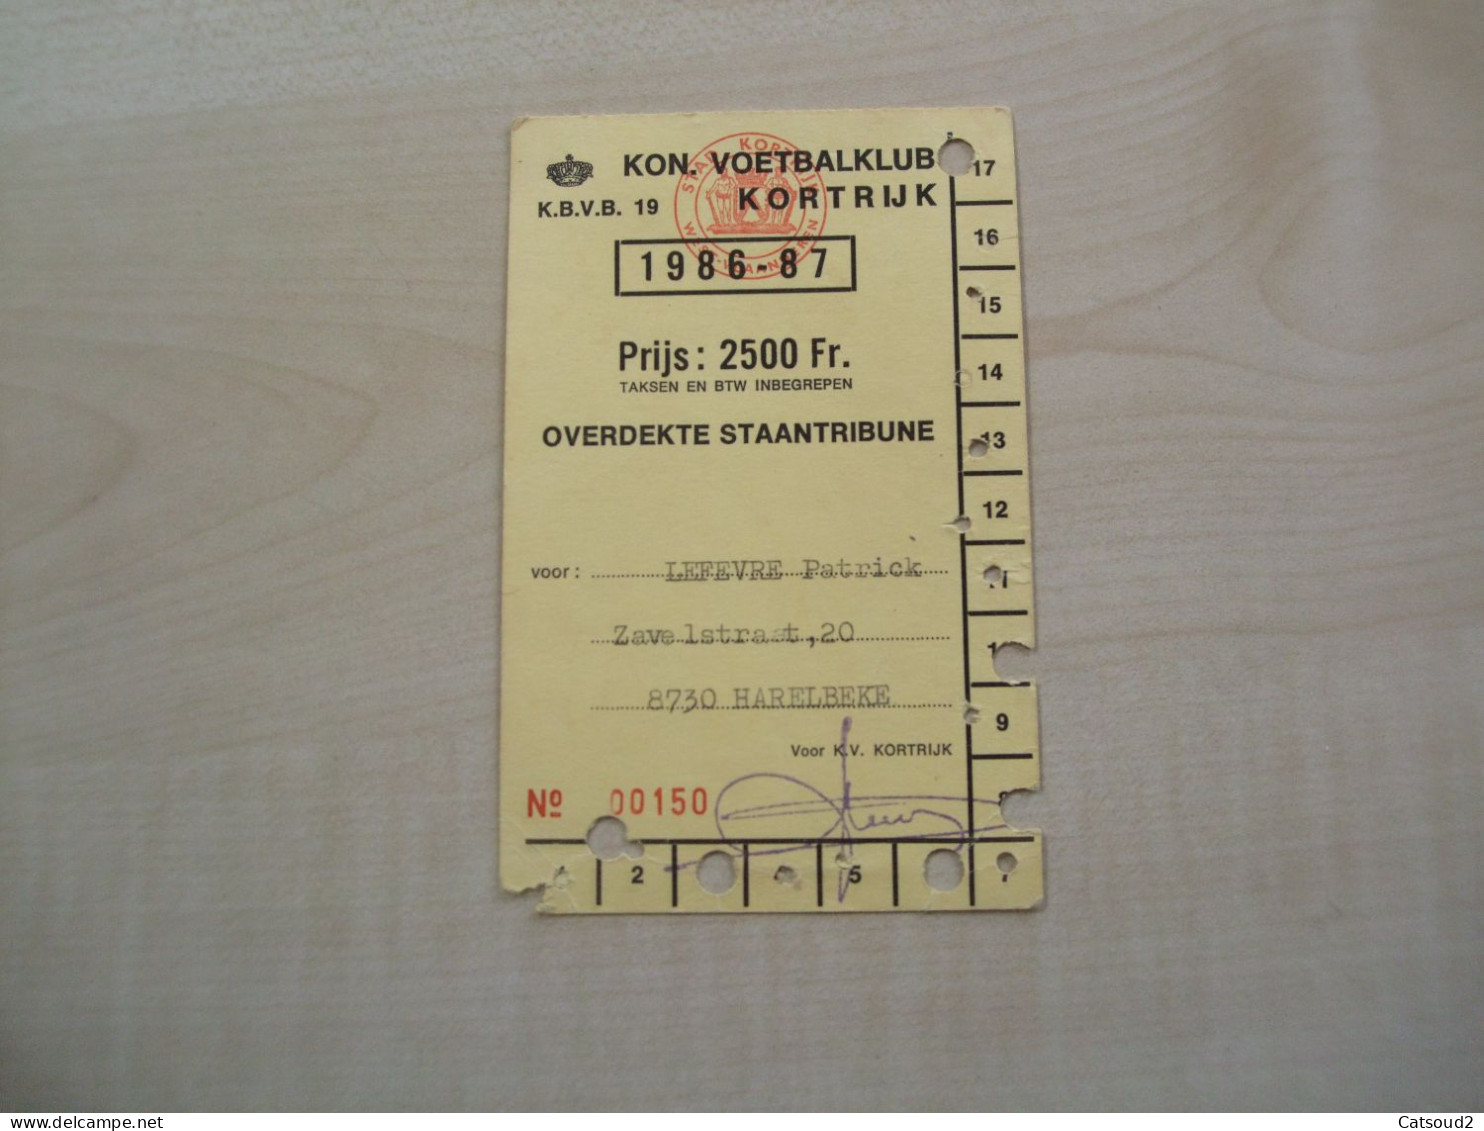 Ancien Ticket Entrée KON. VOETBALKLUB KORTRIJK 1986-87 - Tickets - Vouchers